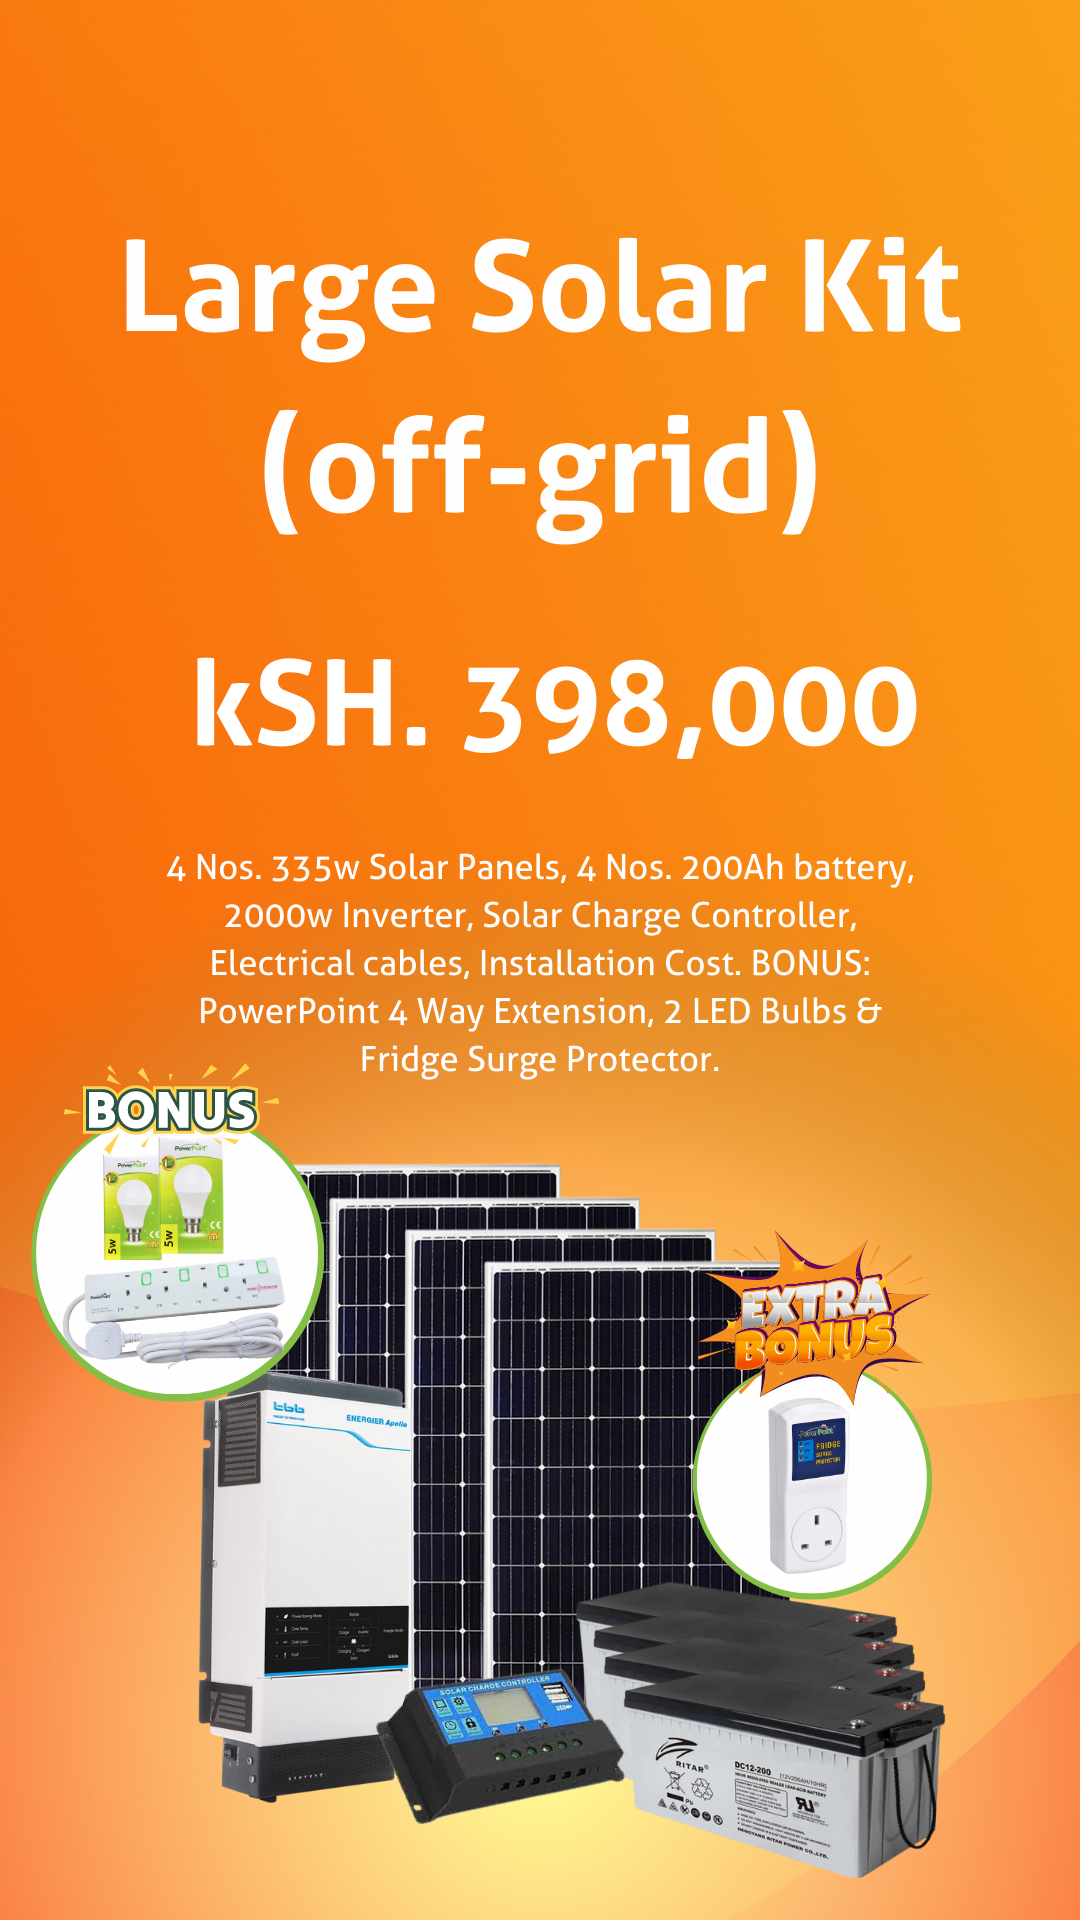 Large Home Offgrid Solar Kit